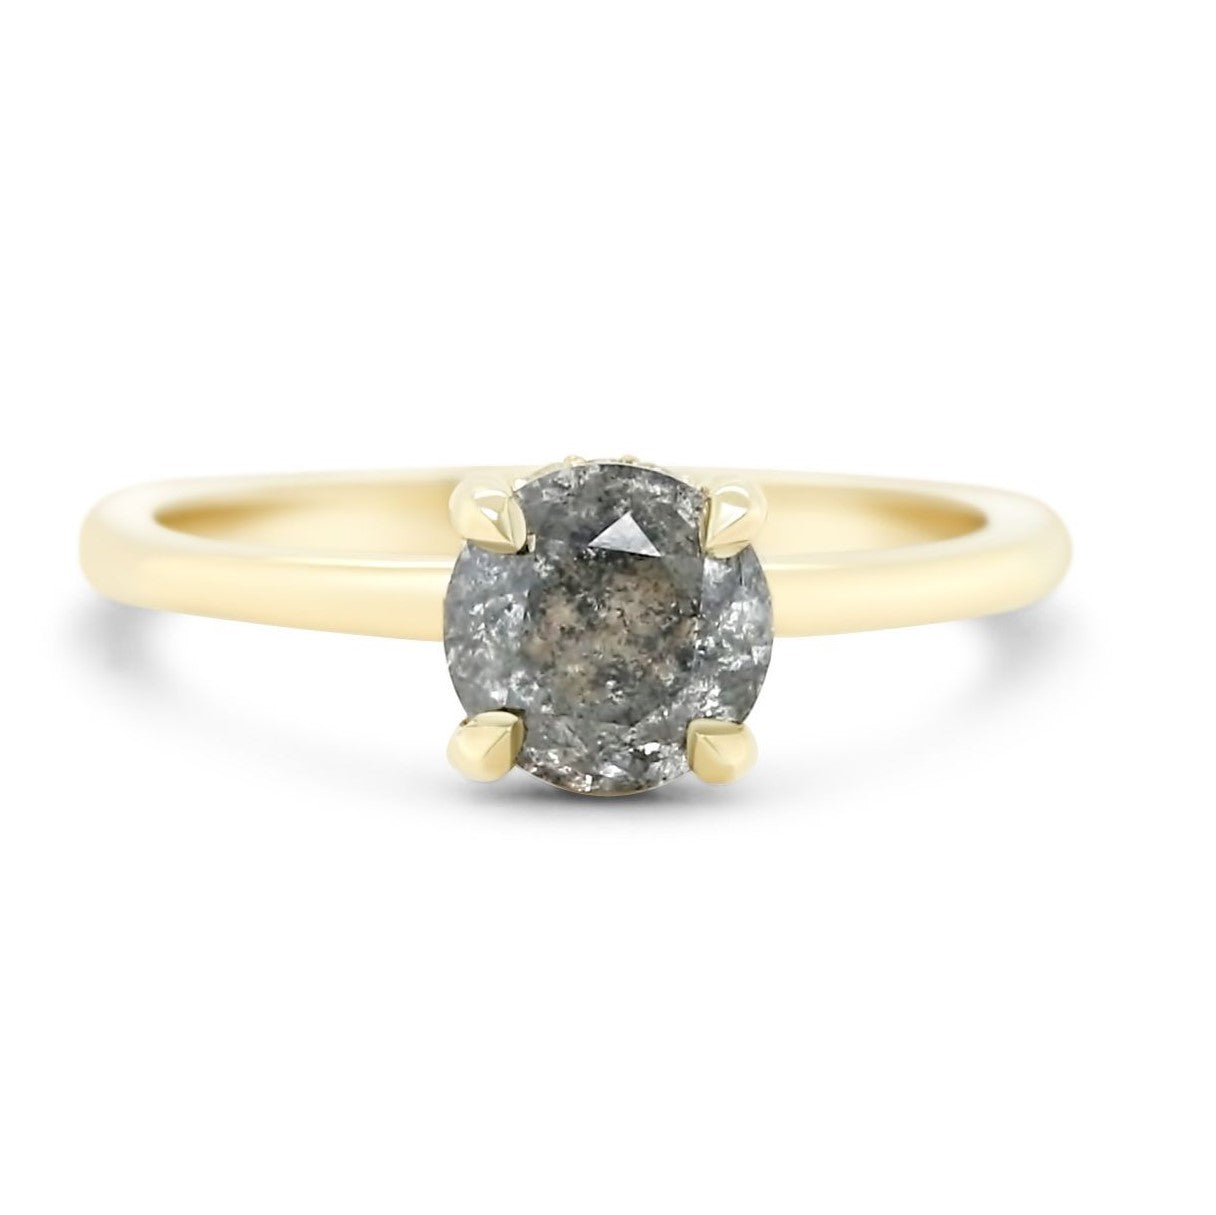 14k yellow gold round gray diamond engagement ring with hidden diamonds on the rail